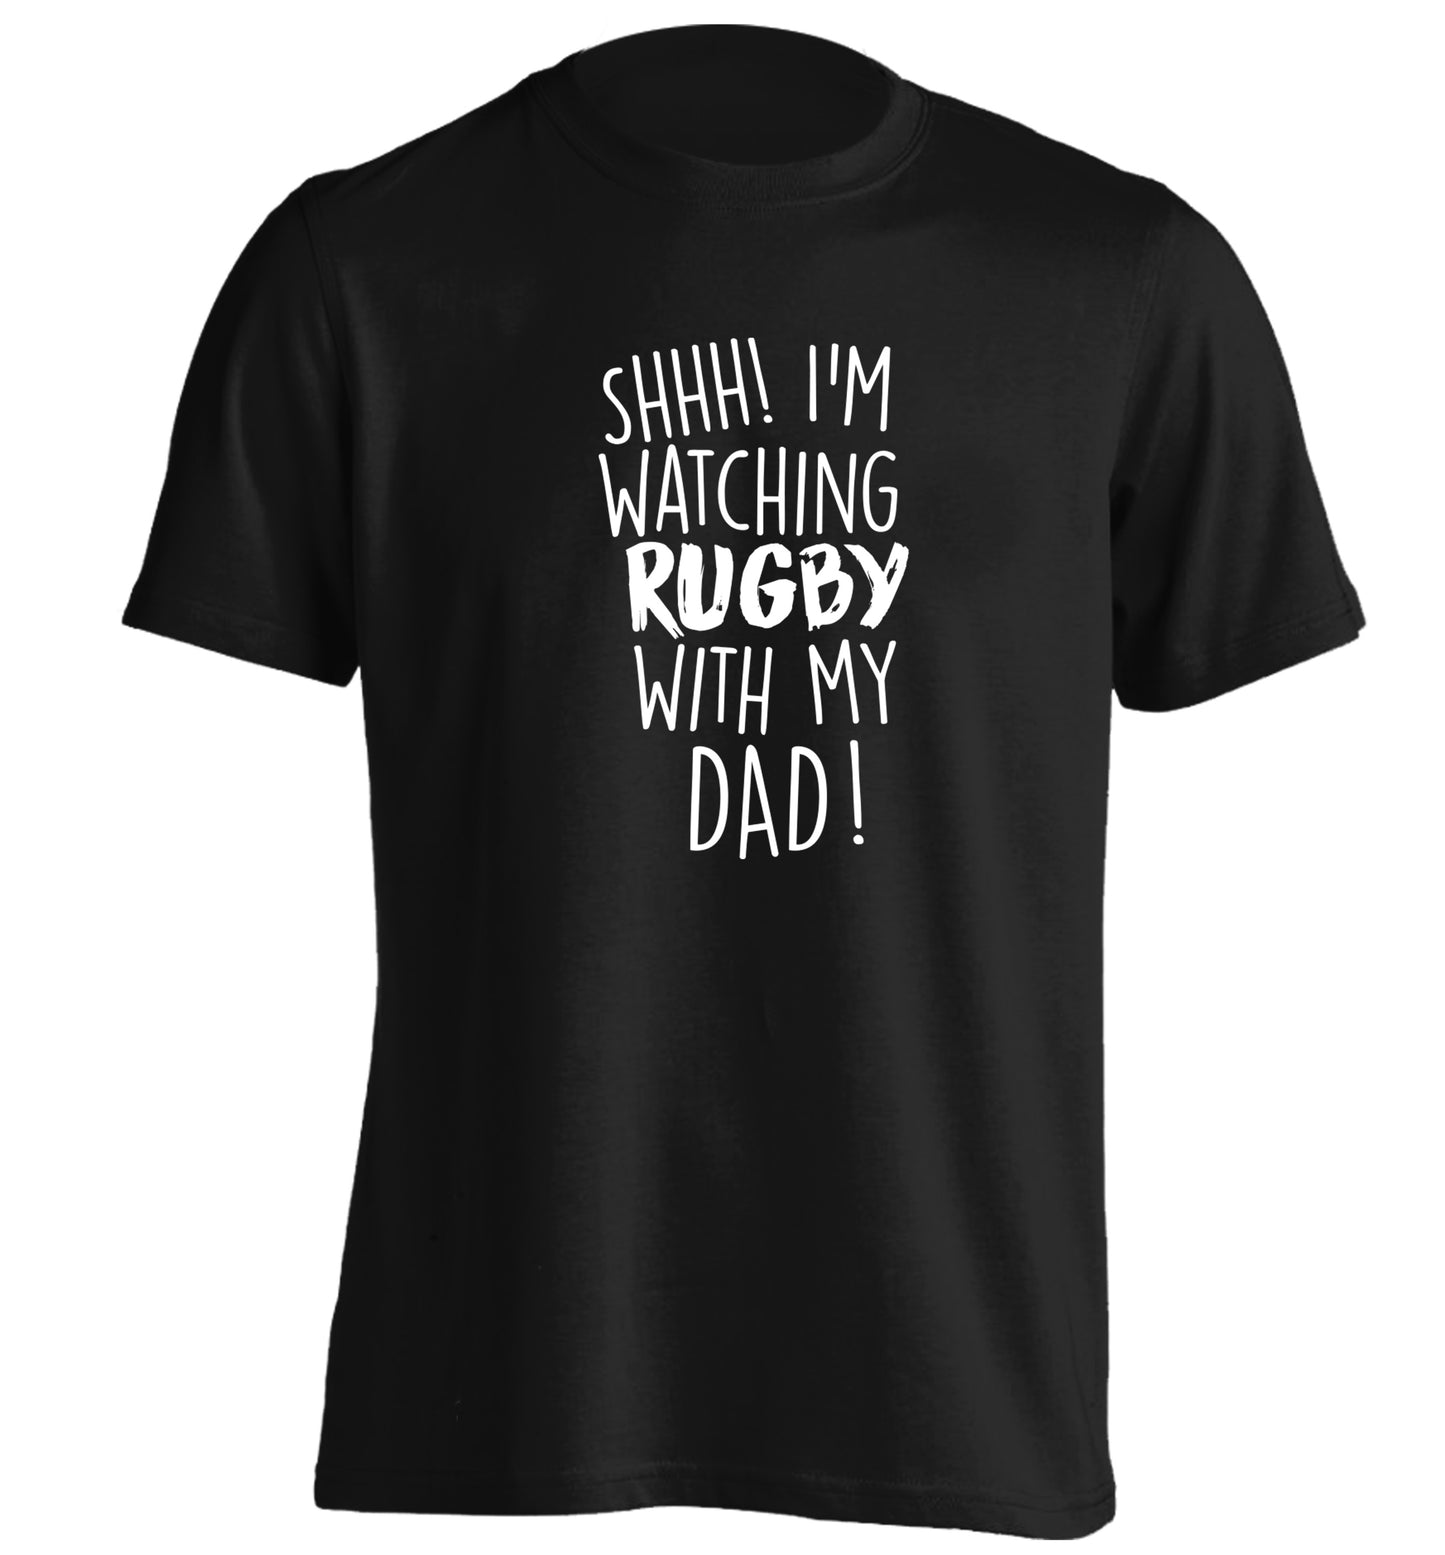 Shh... I'm watching rugby with my dad adults unisex black Tshirt 2XL